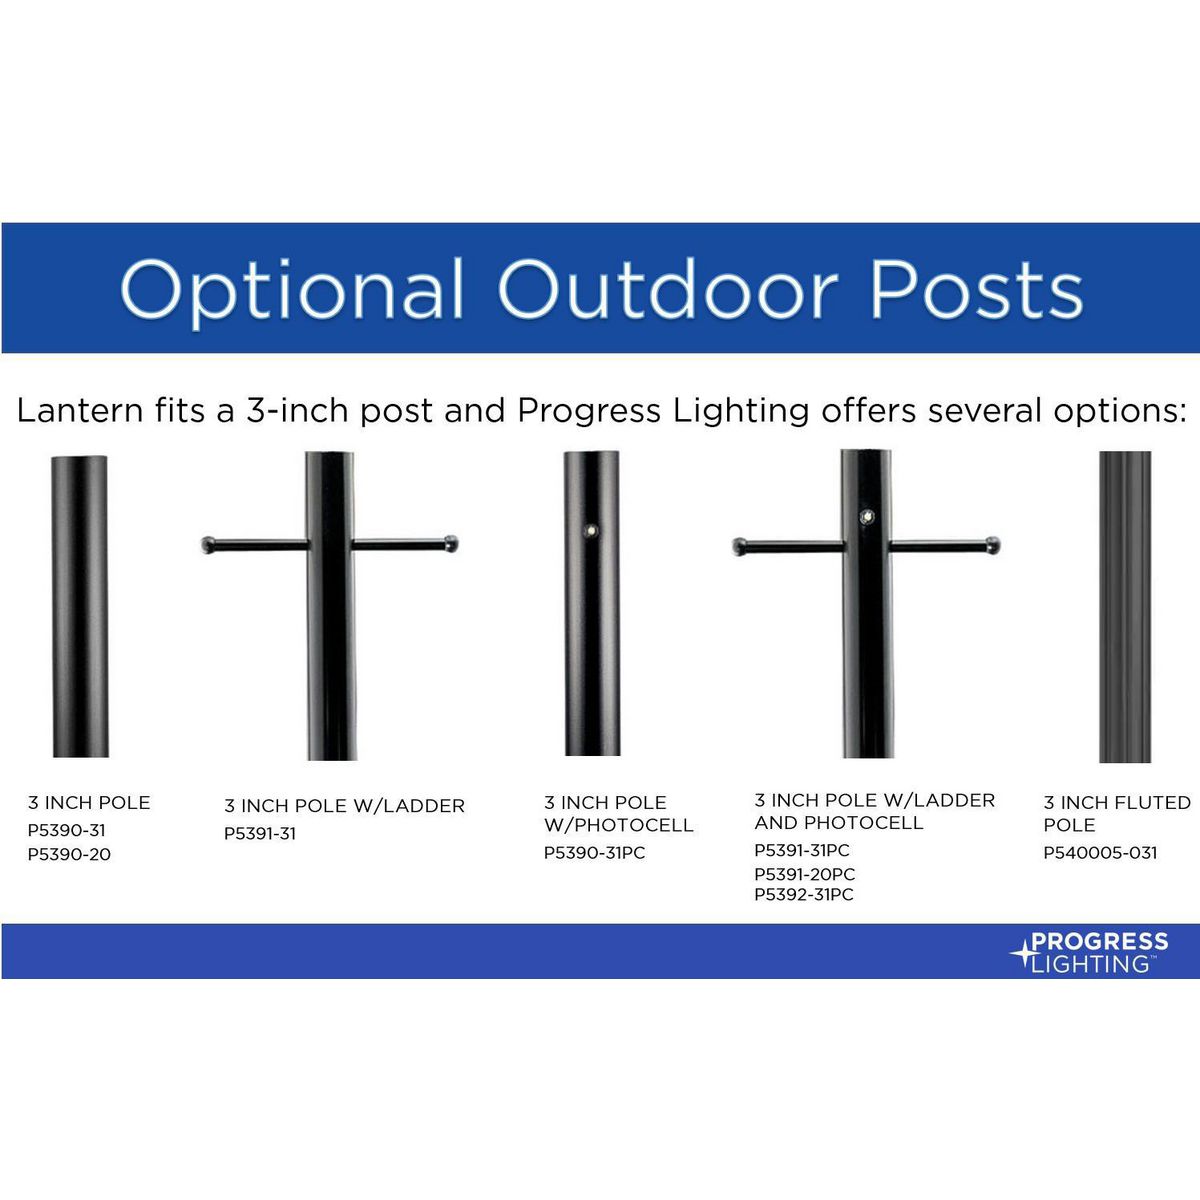 Bradshaw 1-Light Outdoor Post Light